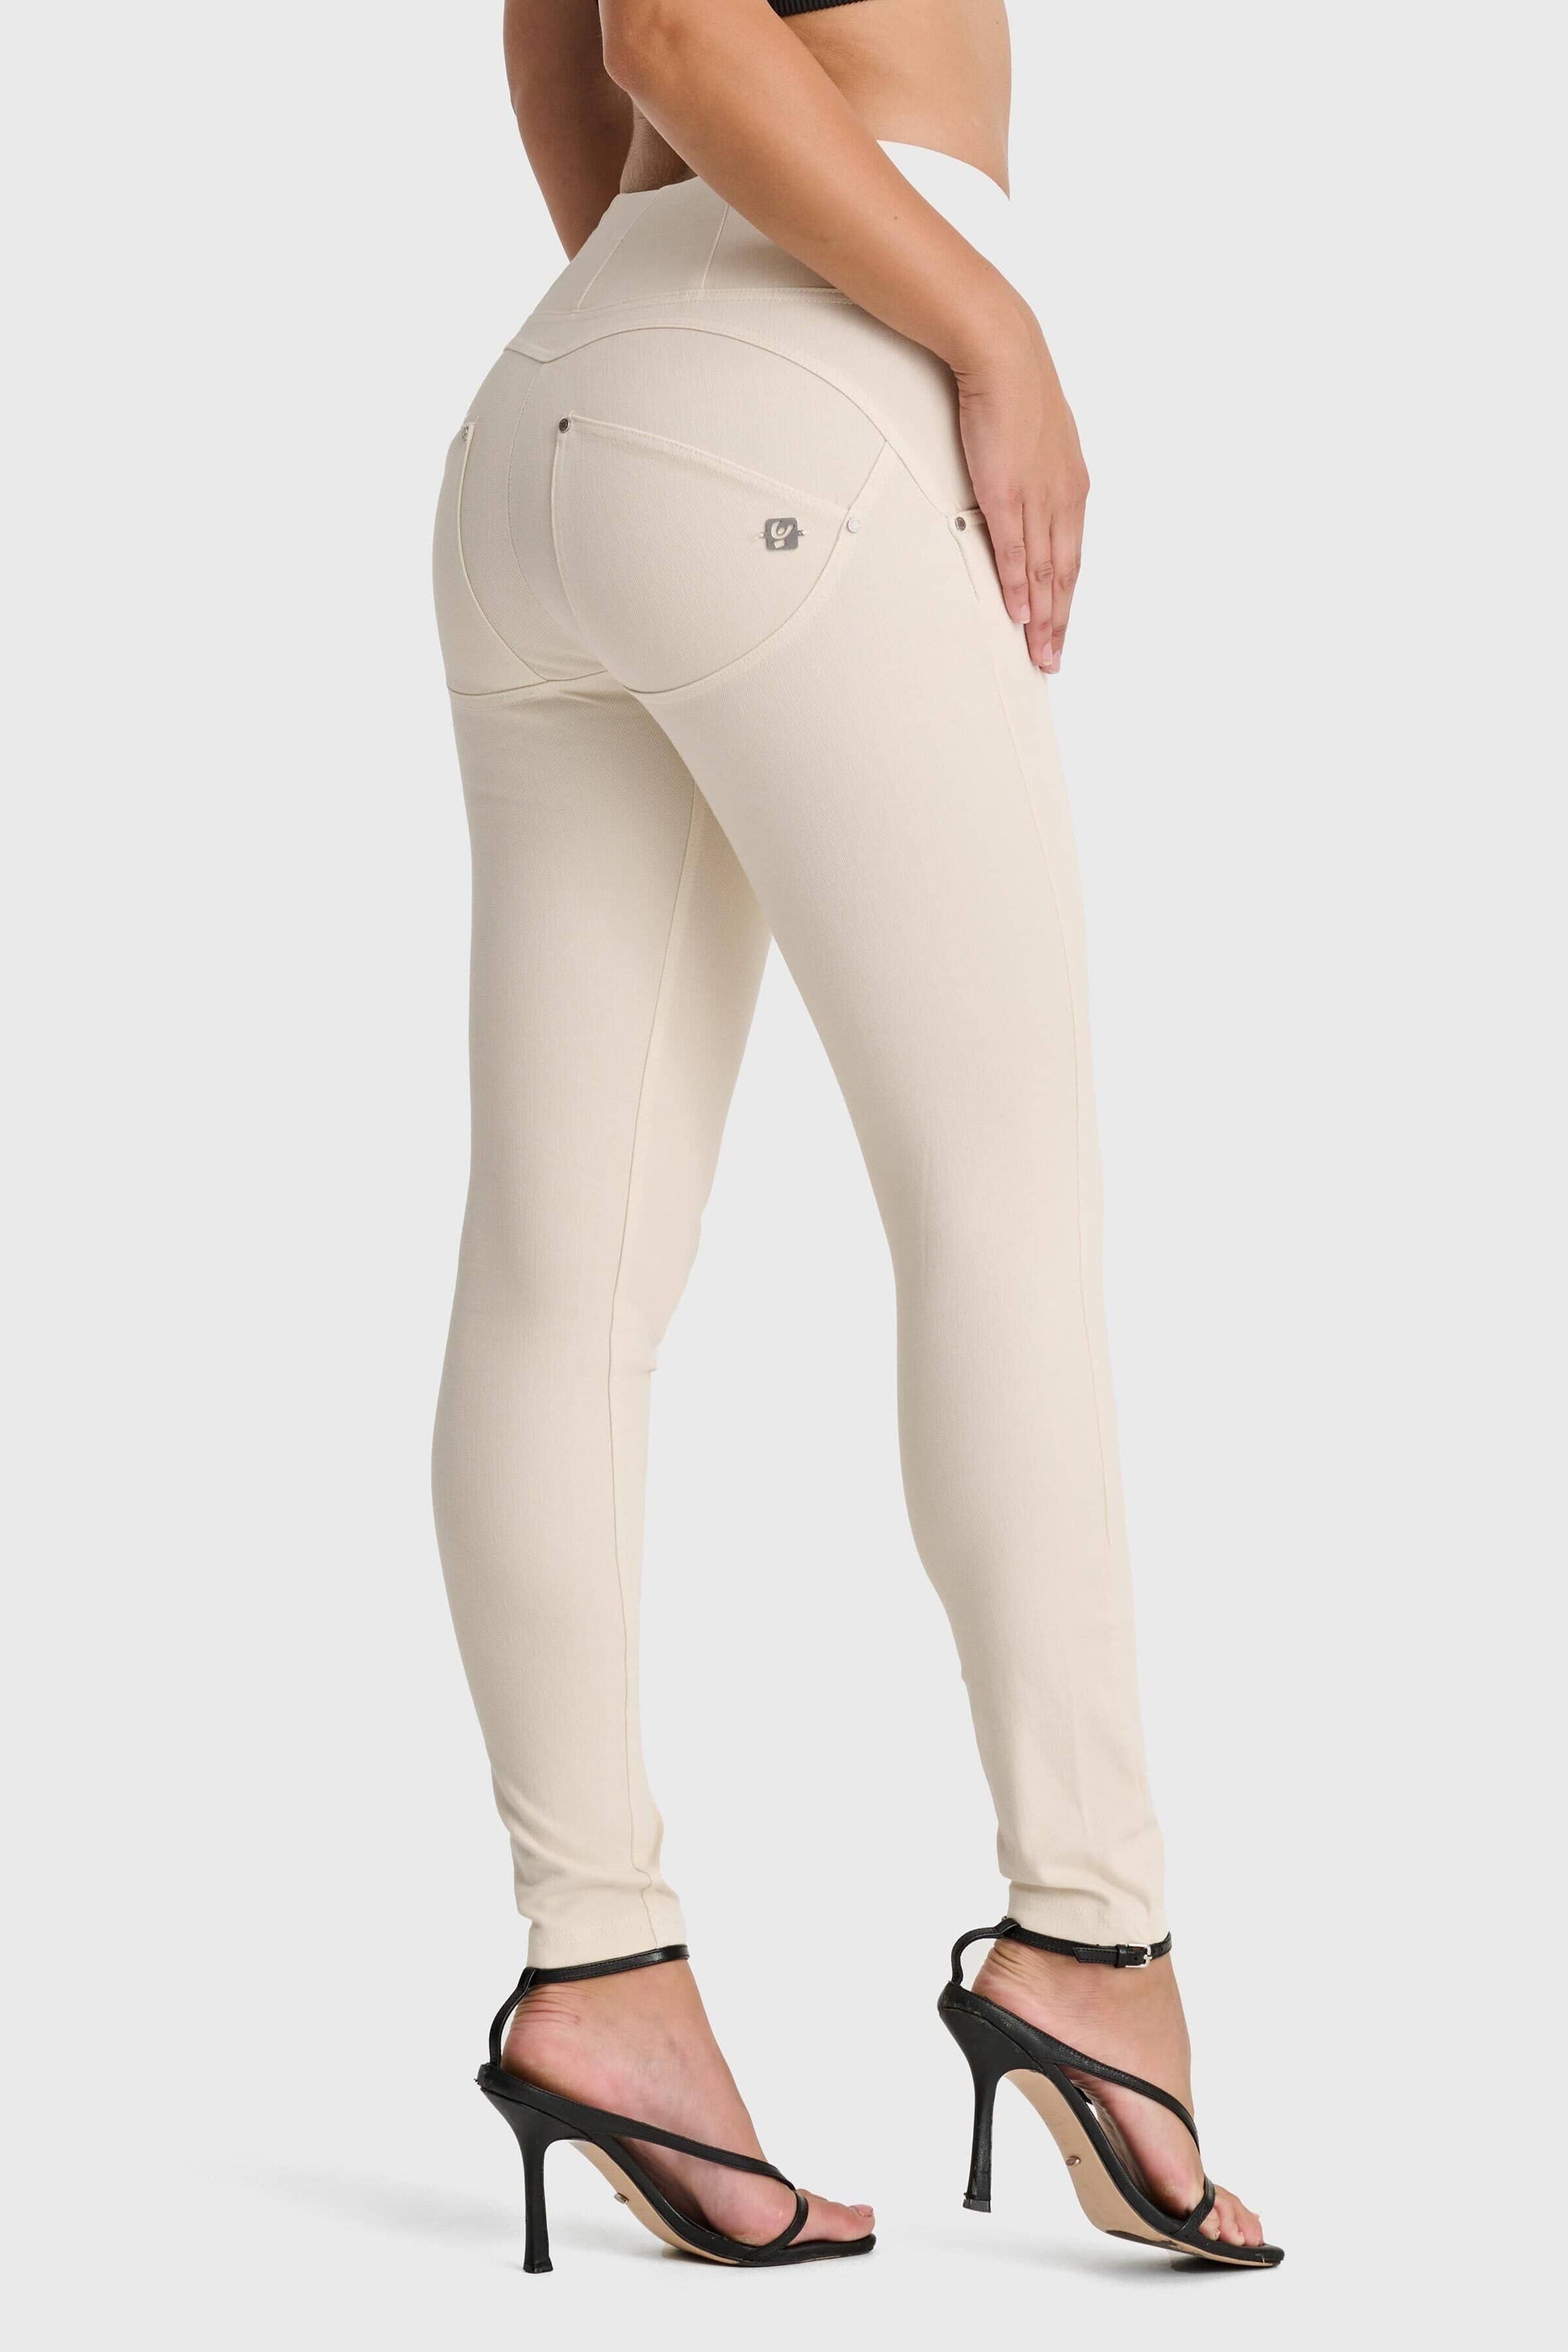 WR.UP® Snug Jeans - High Waisted - Full Length - Ivory 1